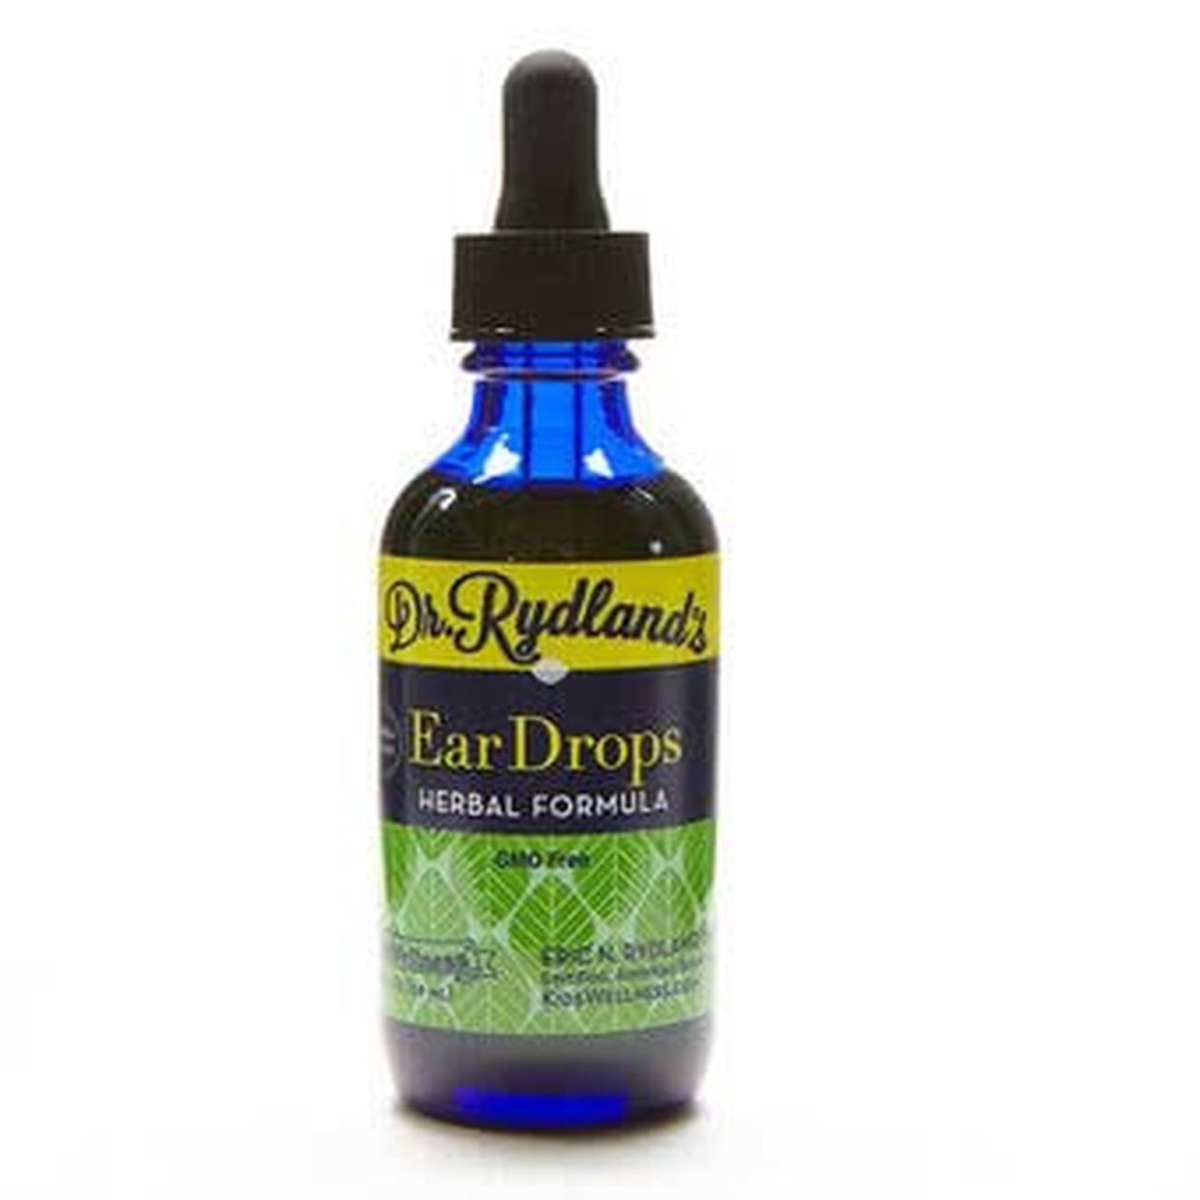 Picture of Dr Rydlands 2478469 2 oz Herbal Formula Ear Drops